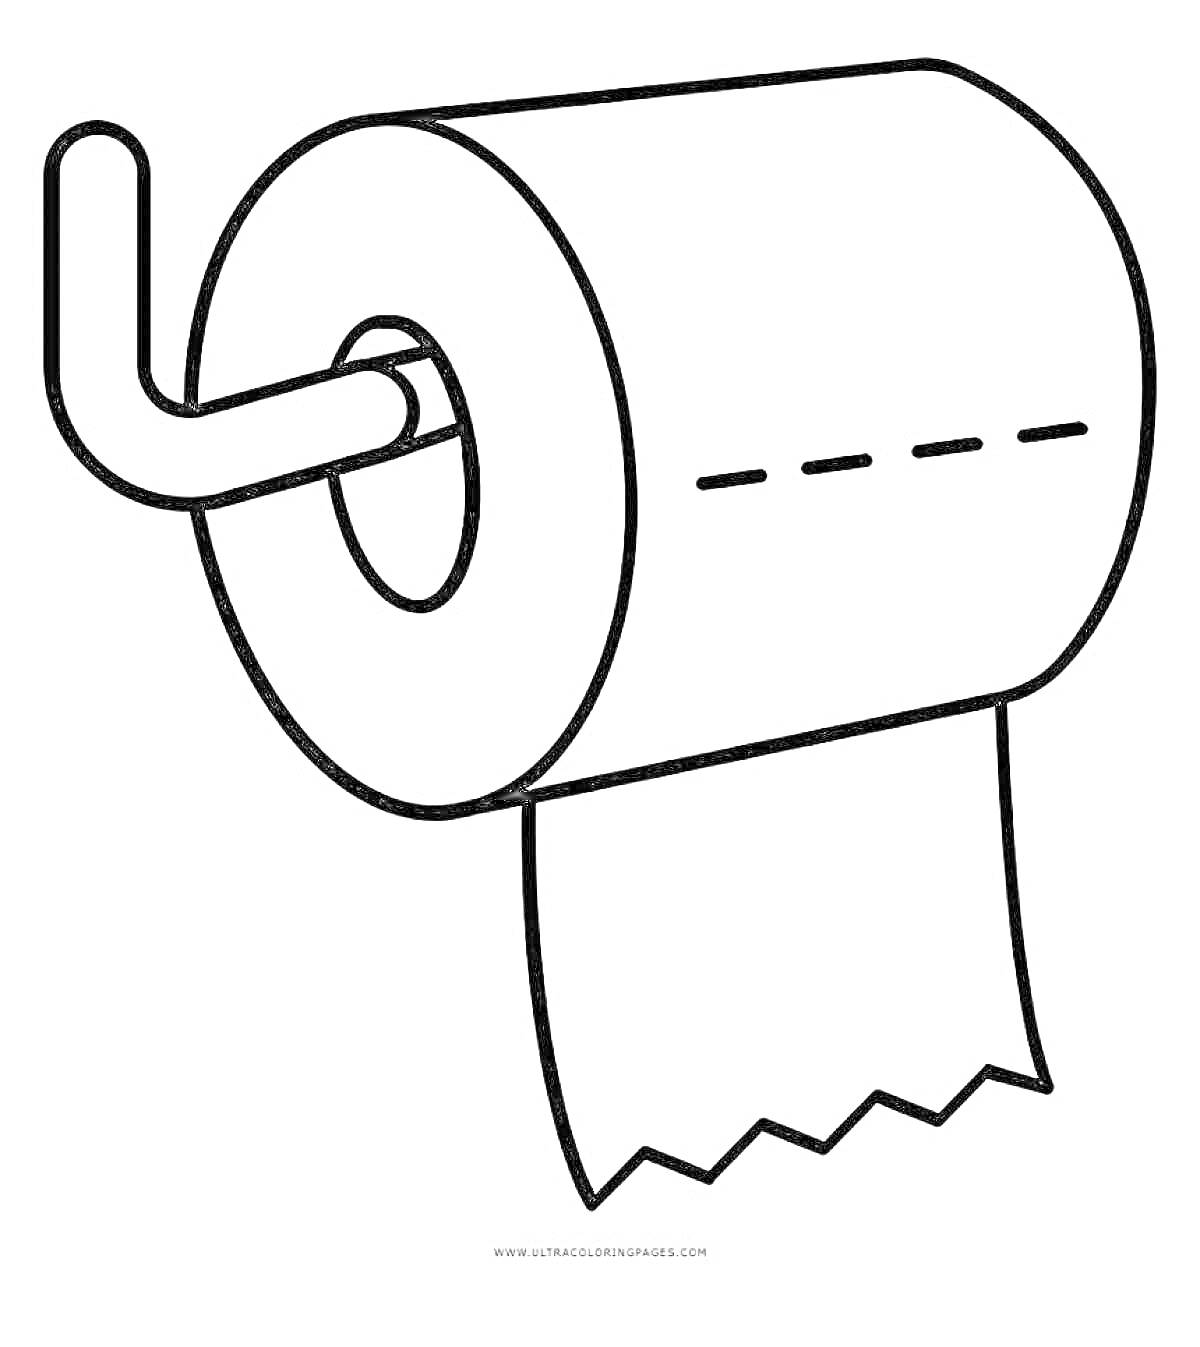 Раскраска Рулон туалетной бумаги на держателе